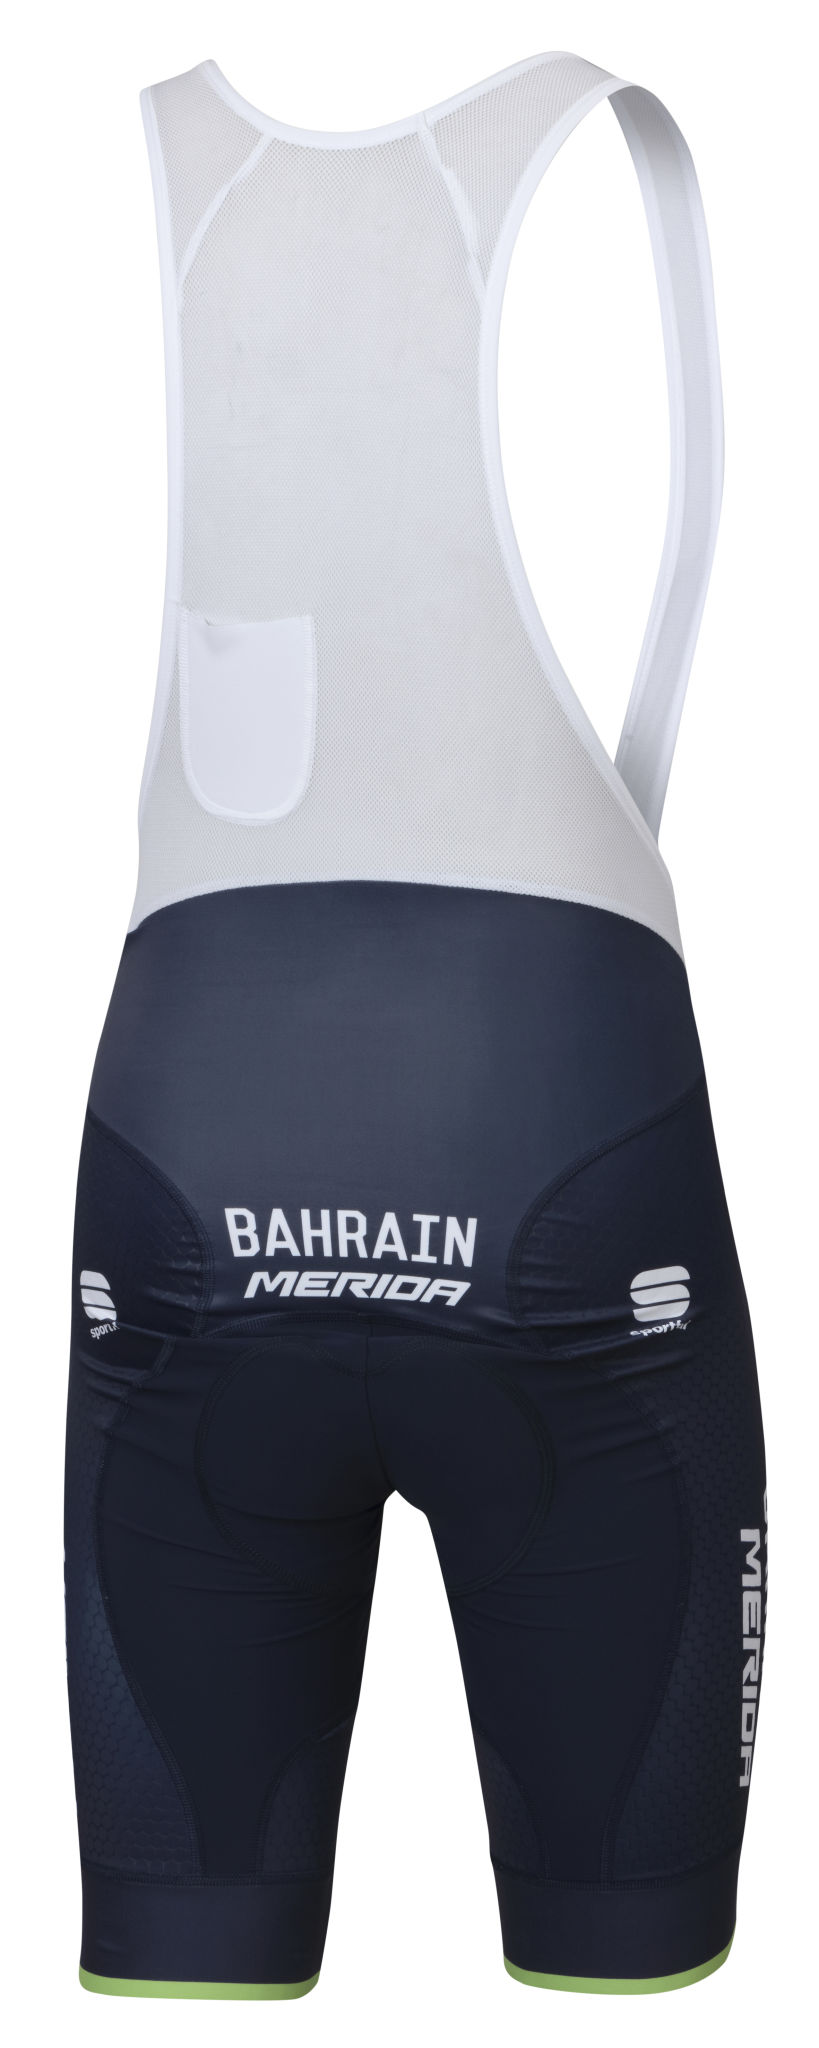 bahrain merida classic bibshort